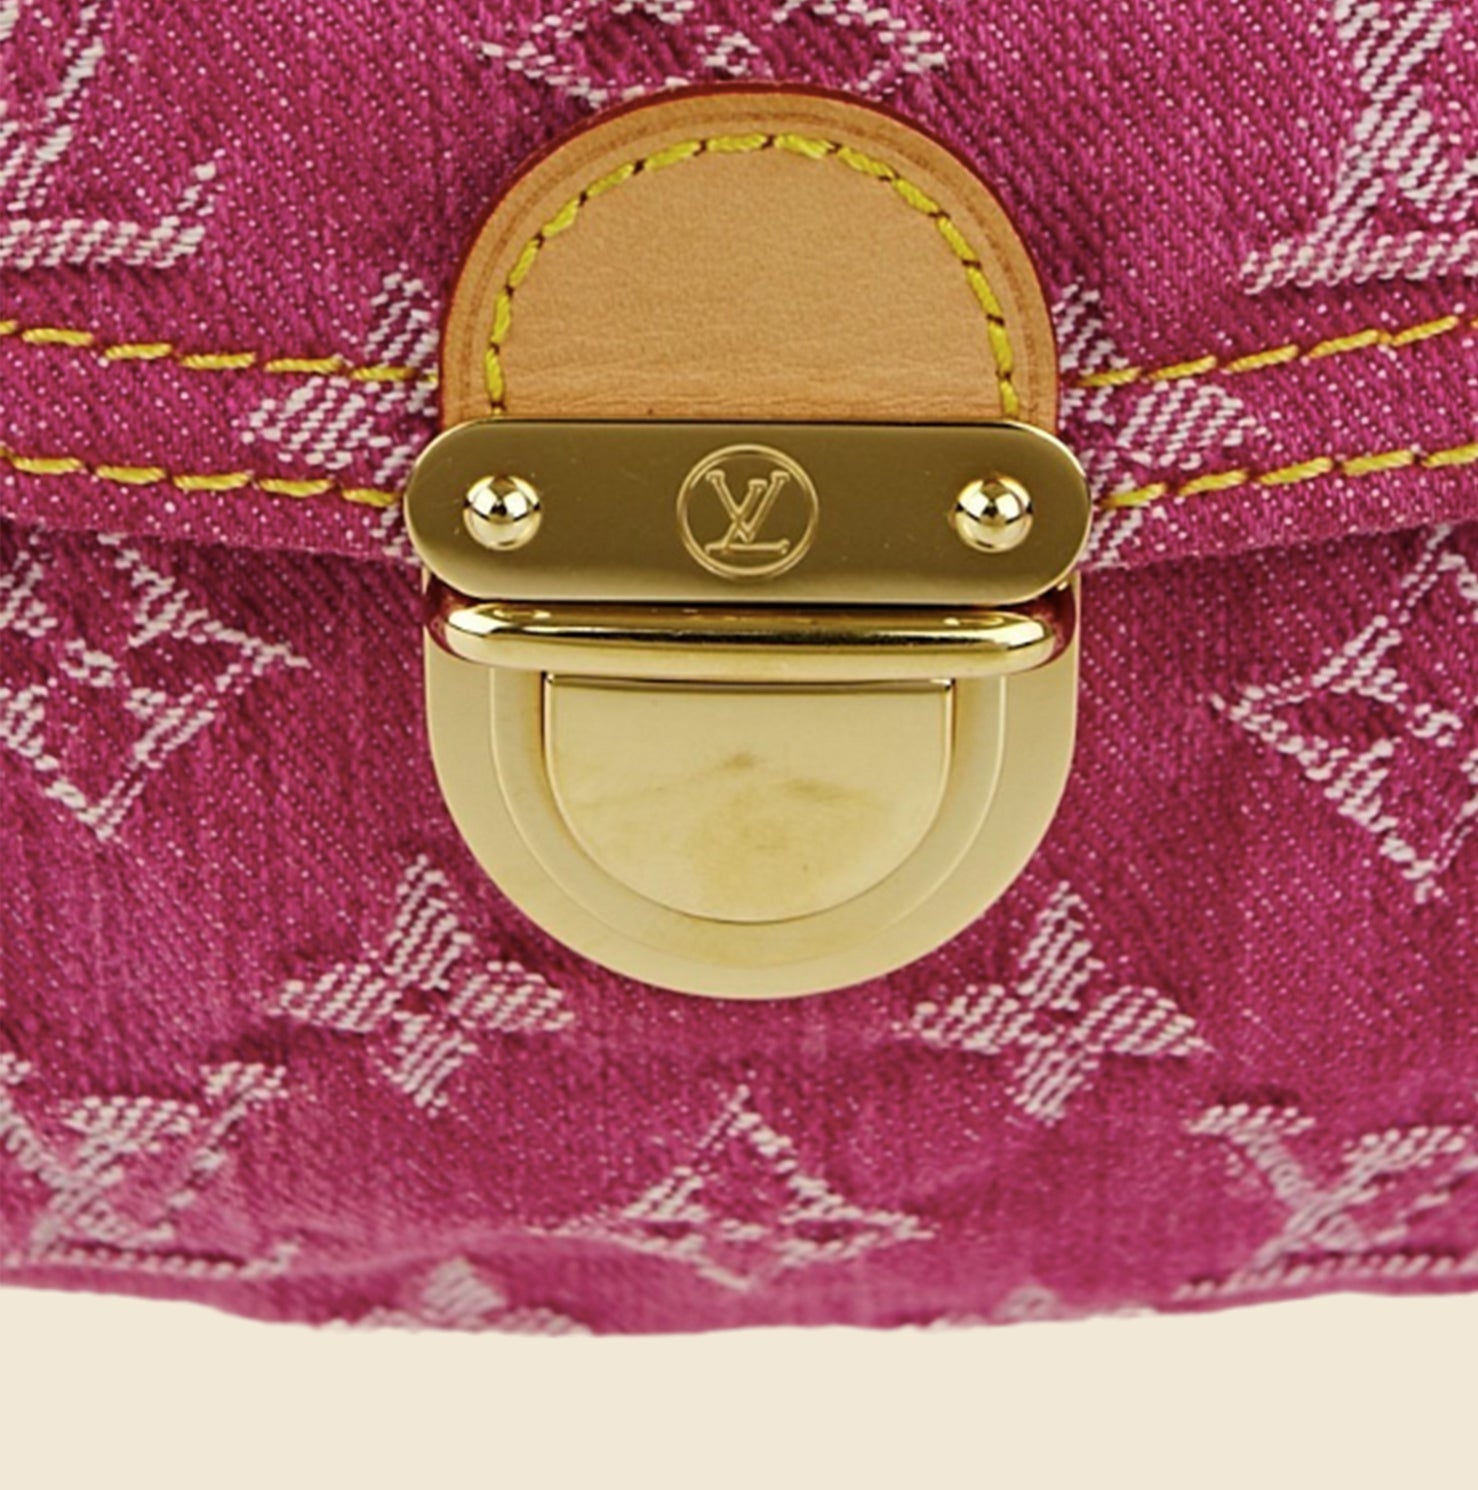 Louis Vuitton's Pink Monogram Denim Footwear